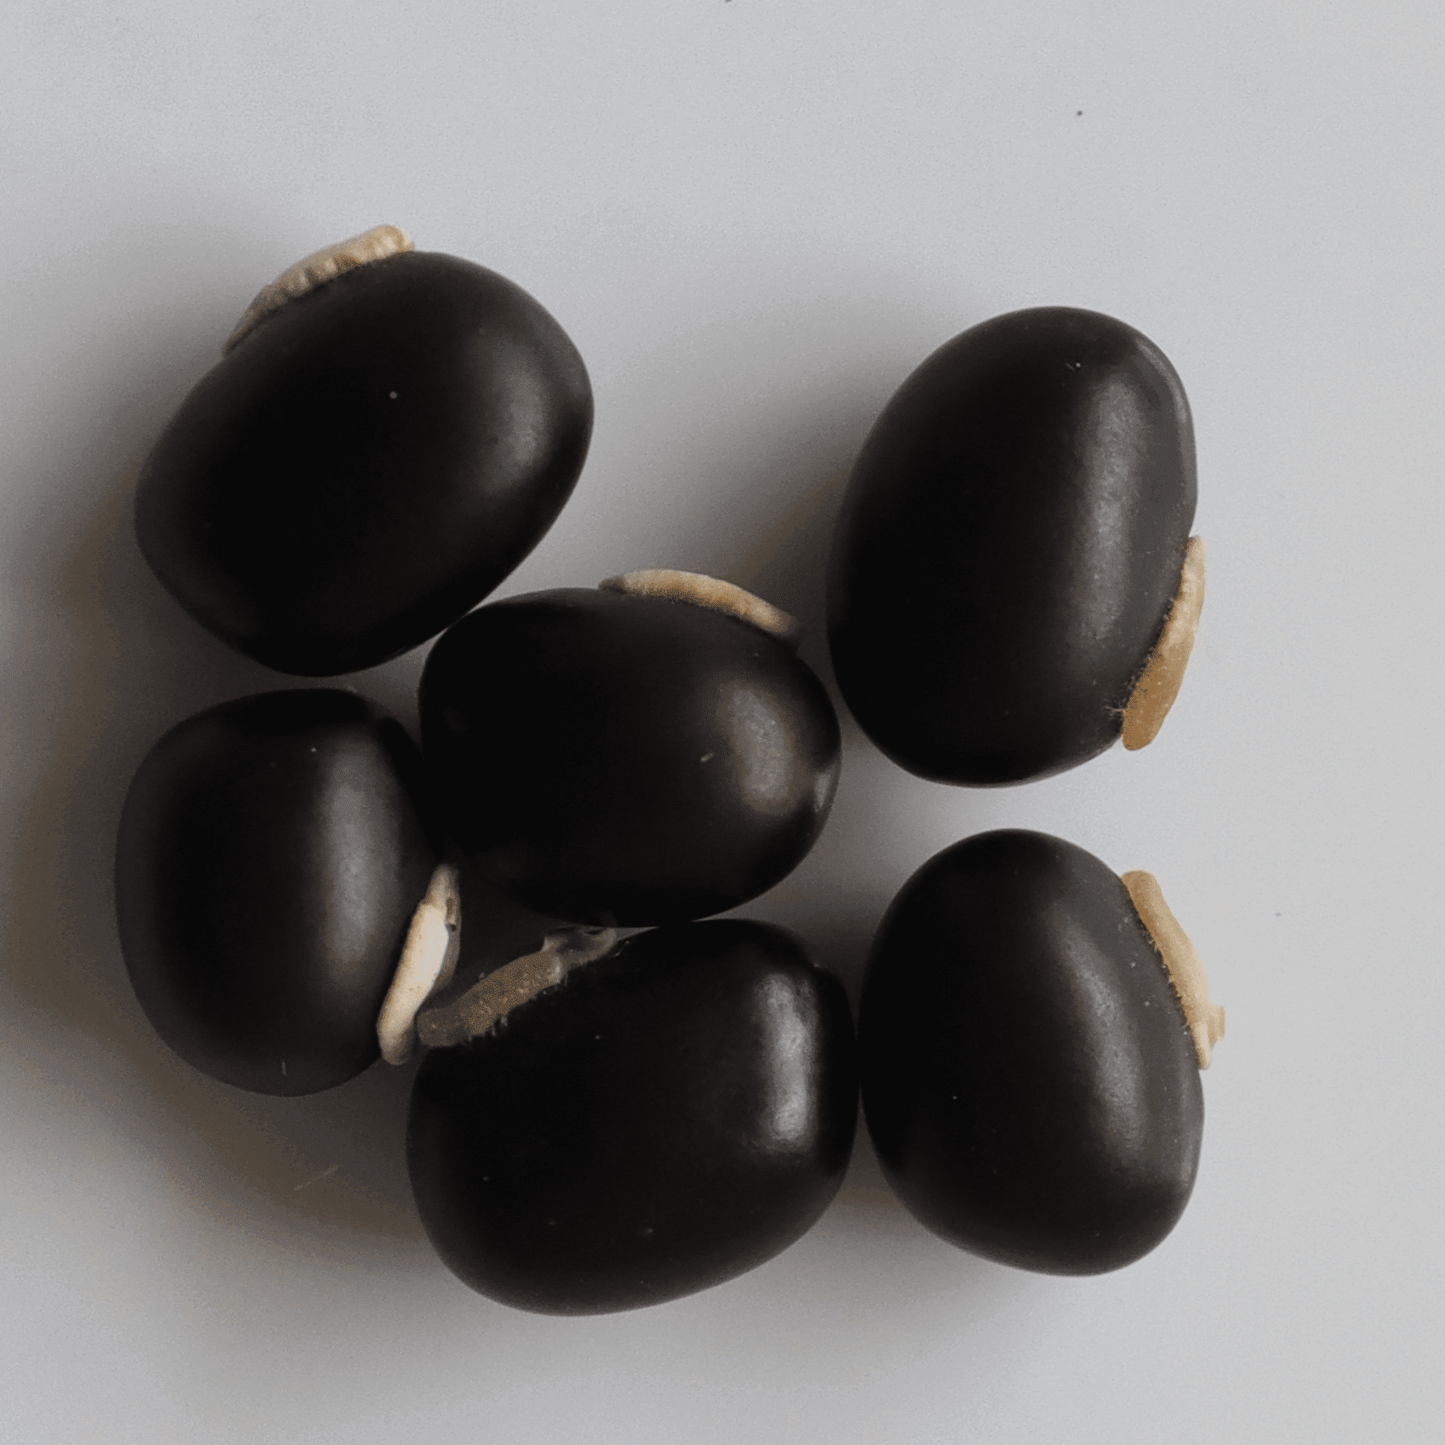 Organic Velvet Beans Seeds - Open Pollinated